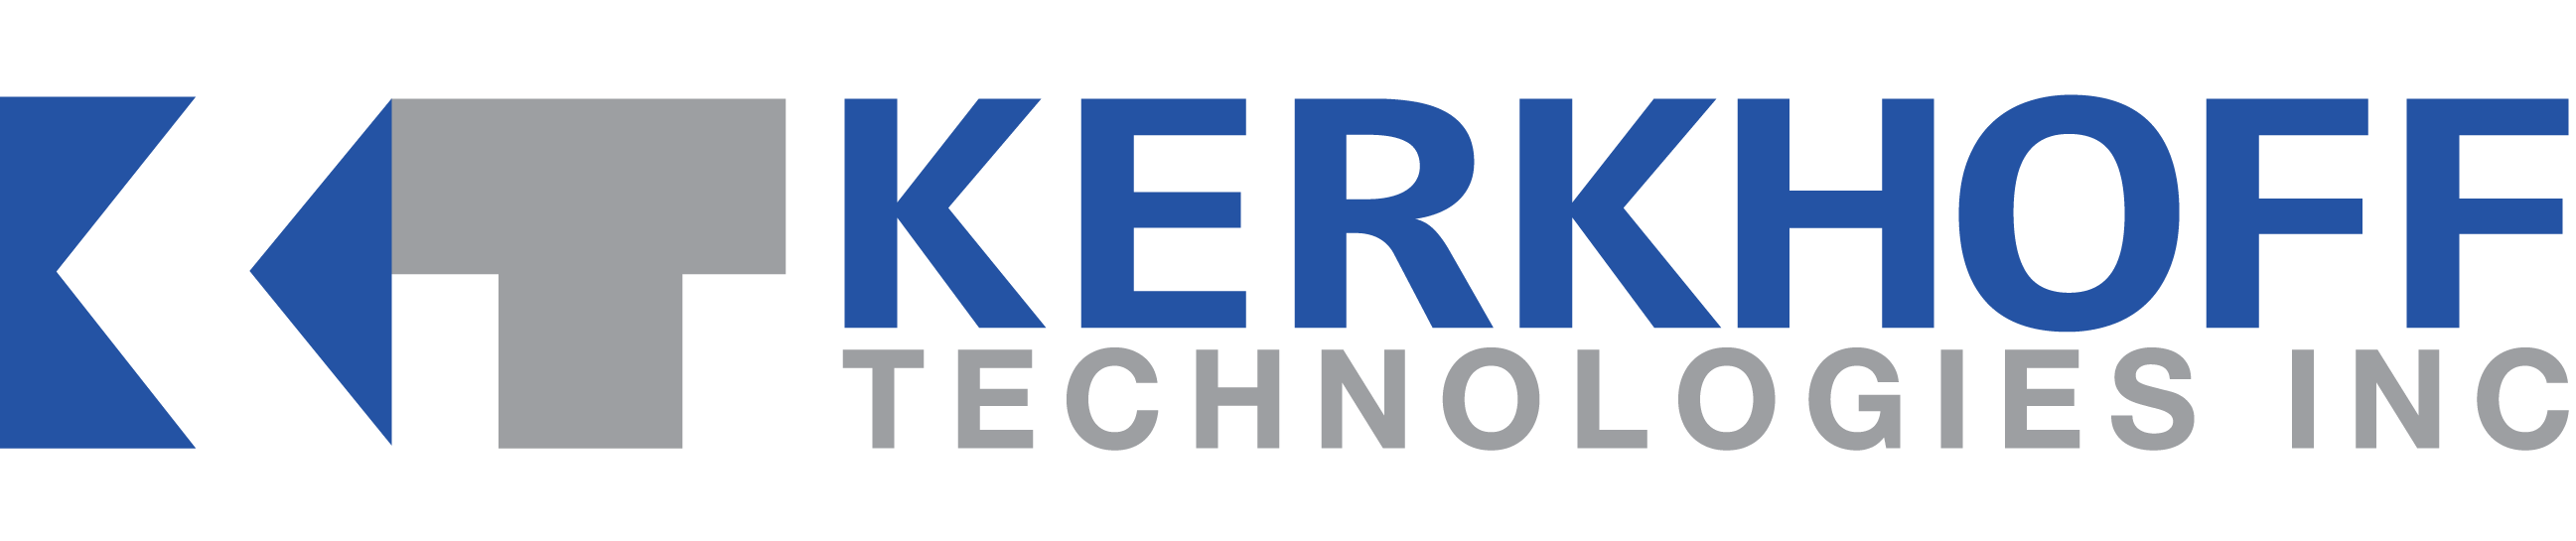 kerkhofftech logo 10b-3-final-curve-cropped